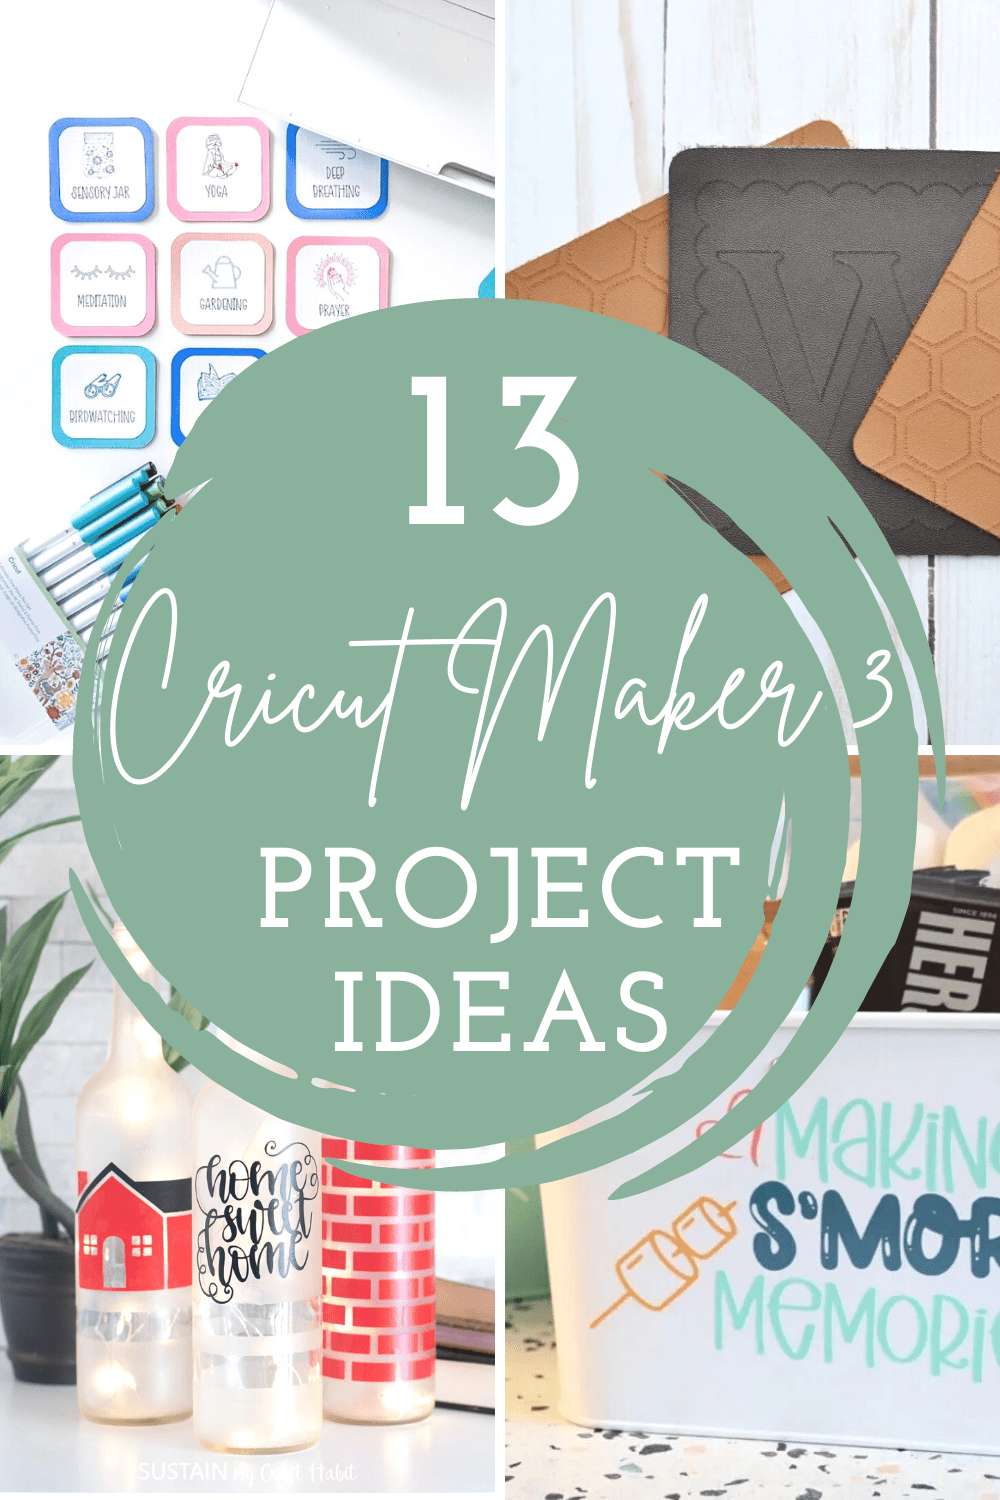 Cricut Maker Project Ideas